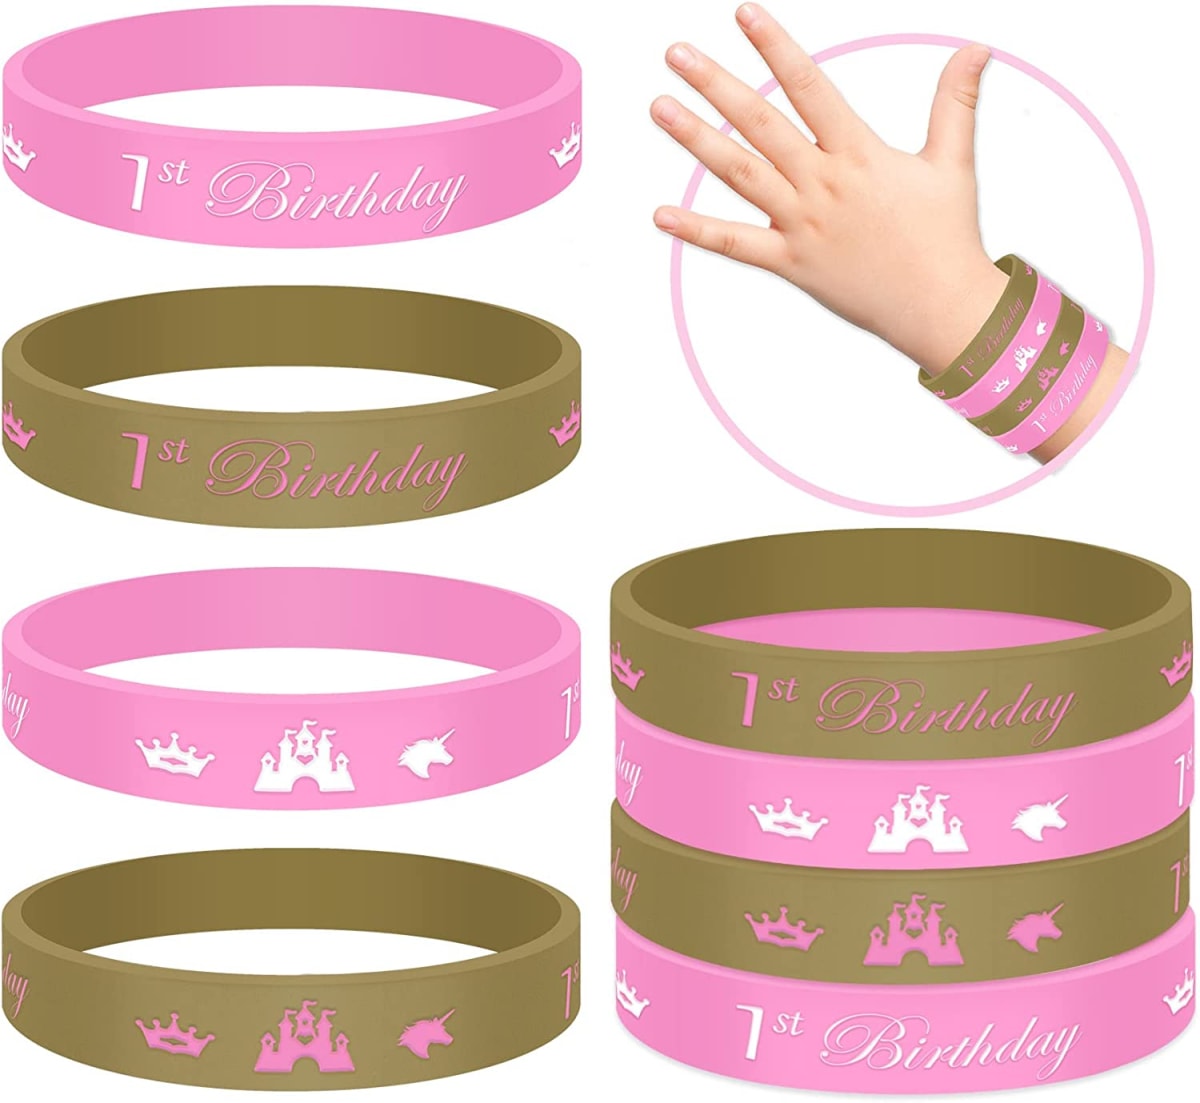 1st Birthday Gold-Pink Wristbands